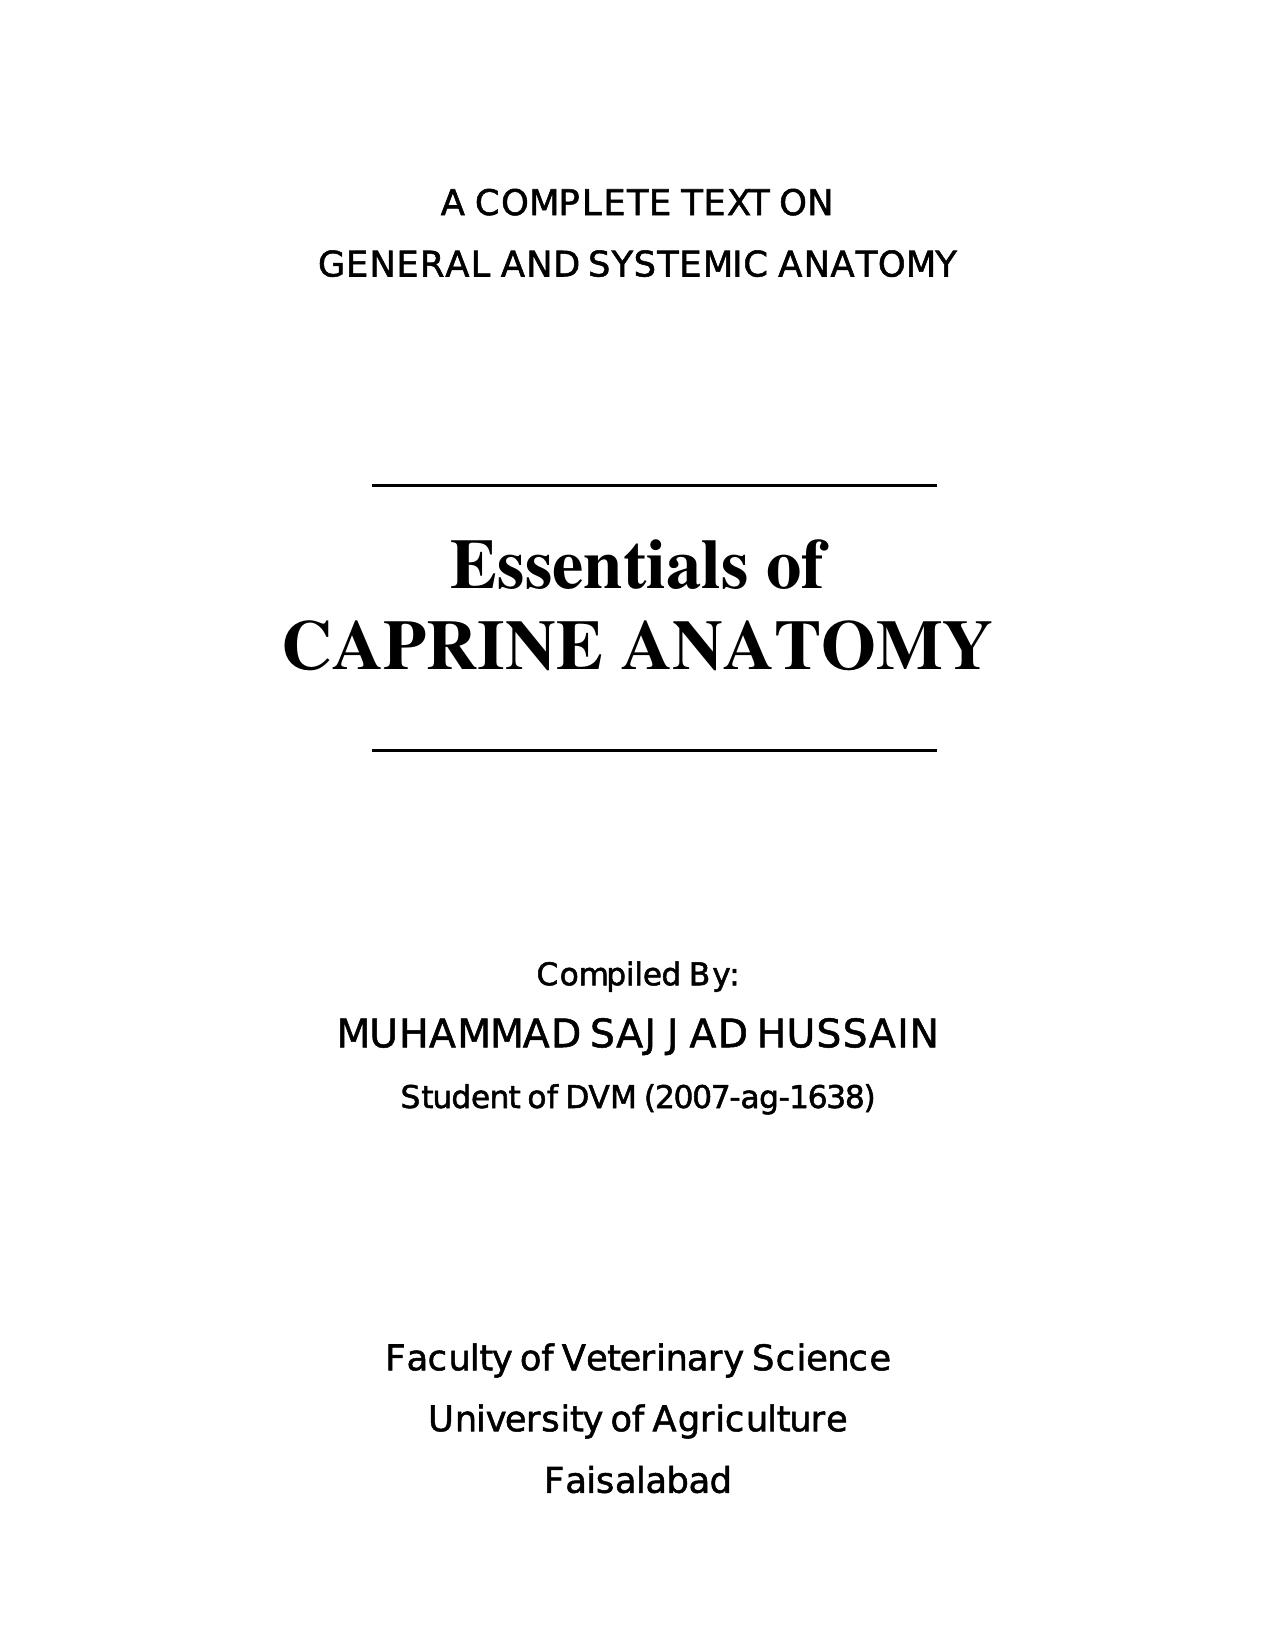 caprine-anatomy 2010